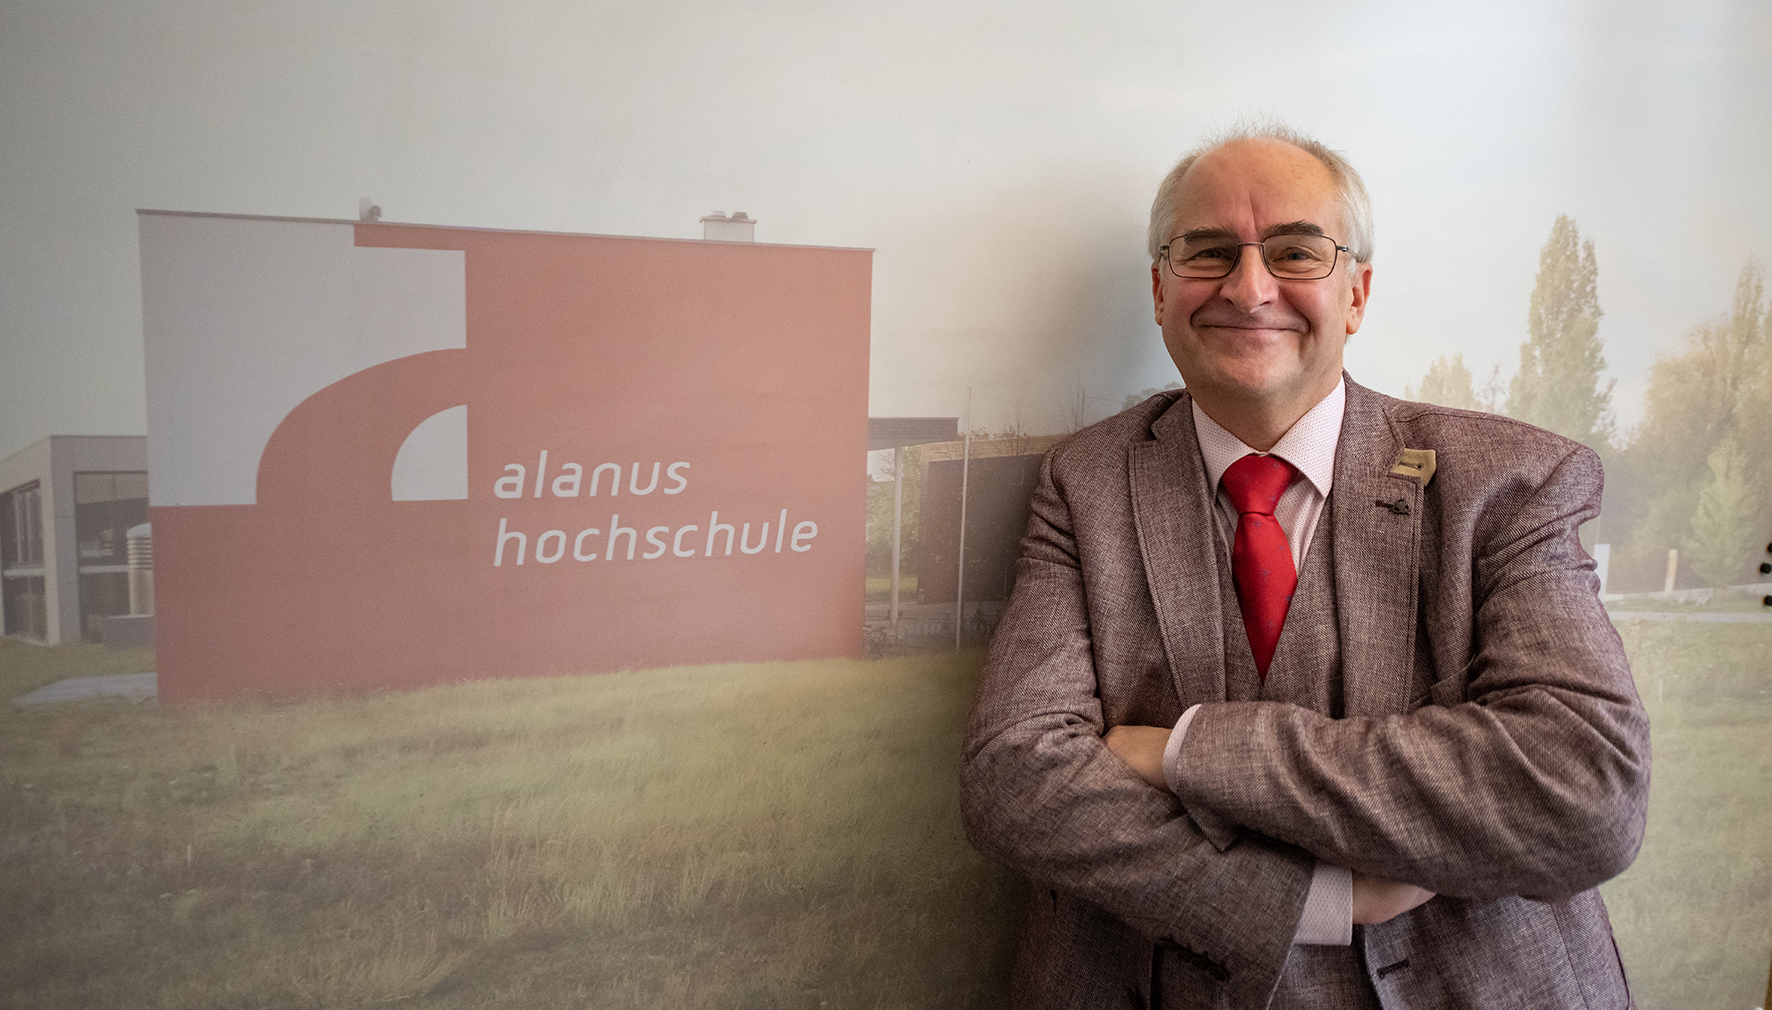 Hans-Joachim Pieper als Rektor der Alanus Hochschule bestätigt